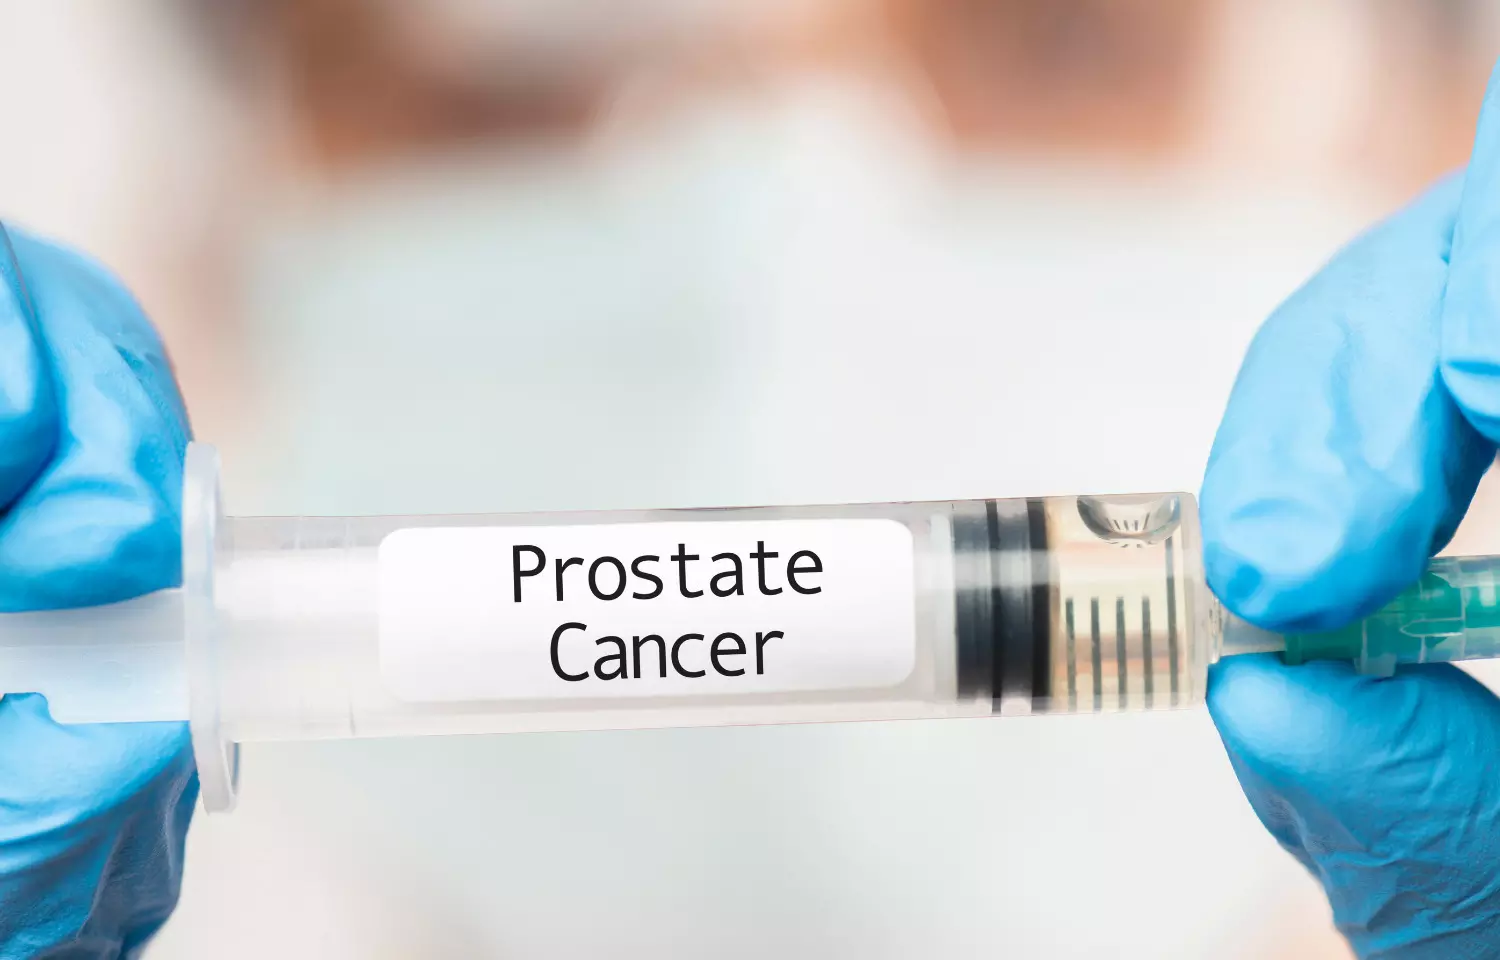 PSA prostate cancer screening found more beneficial than previous estimates, especially for blacks